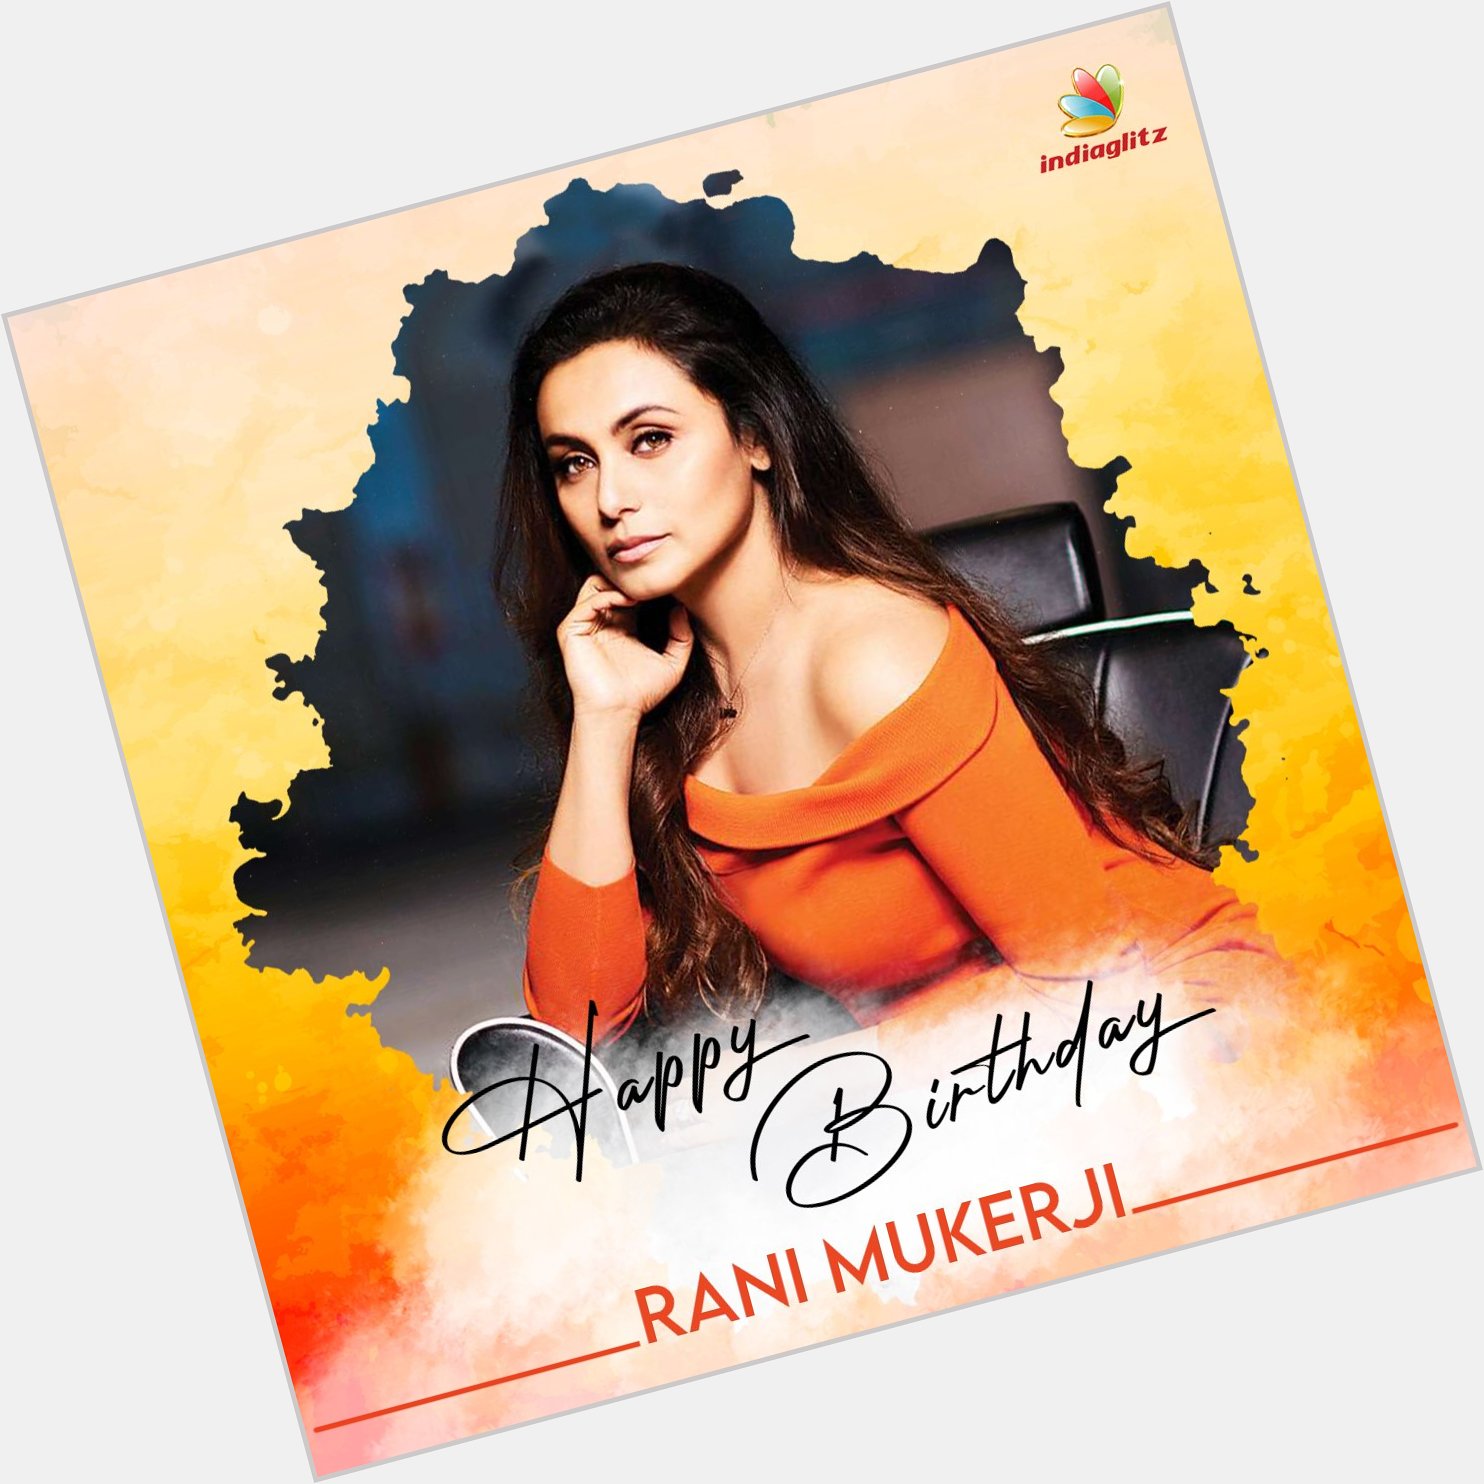 Wishing Actress Rani Mukerji a Very Happy Birthday   